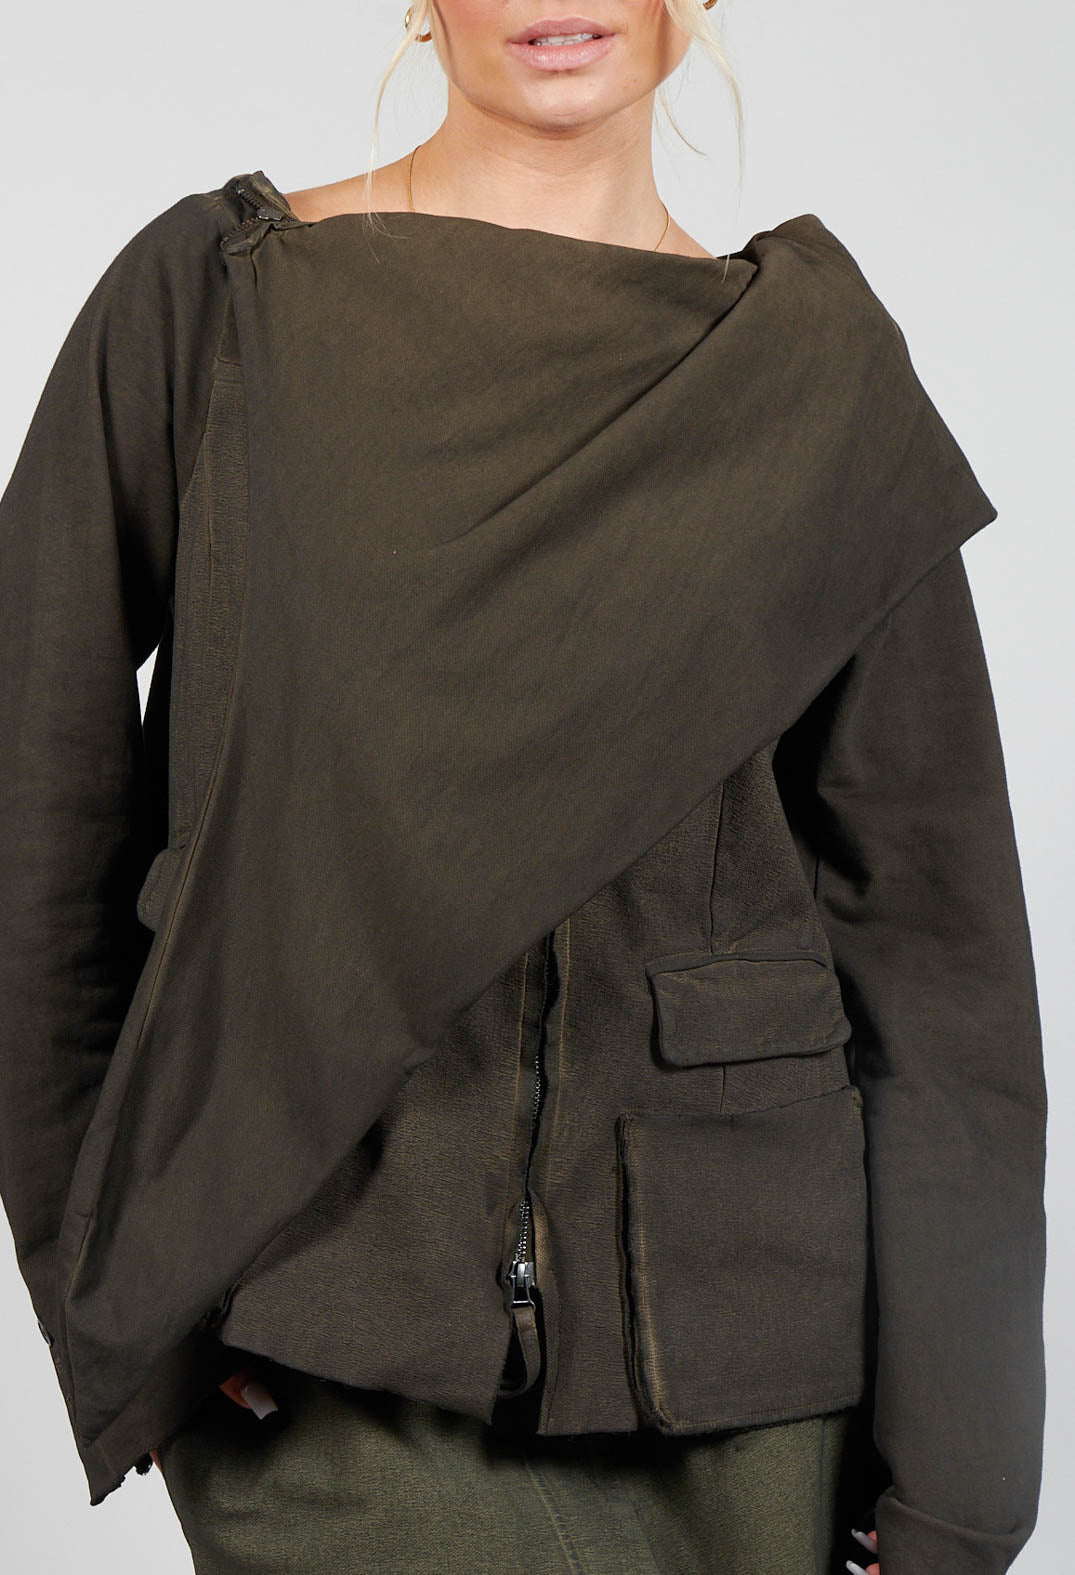 stylish ladies utility jacket with a scarf neck in khaki cloud